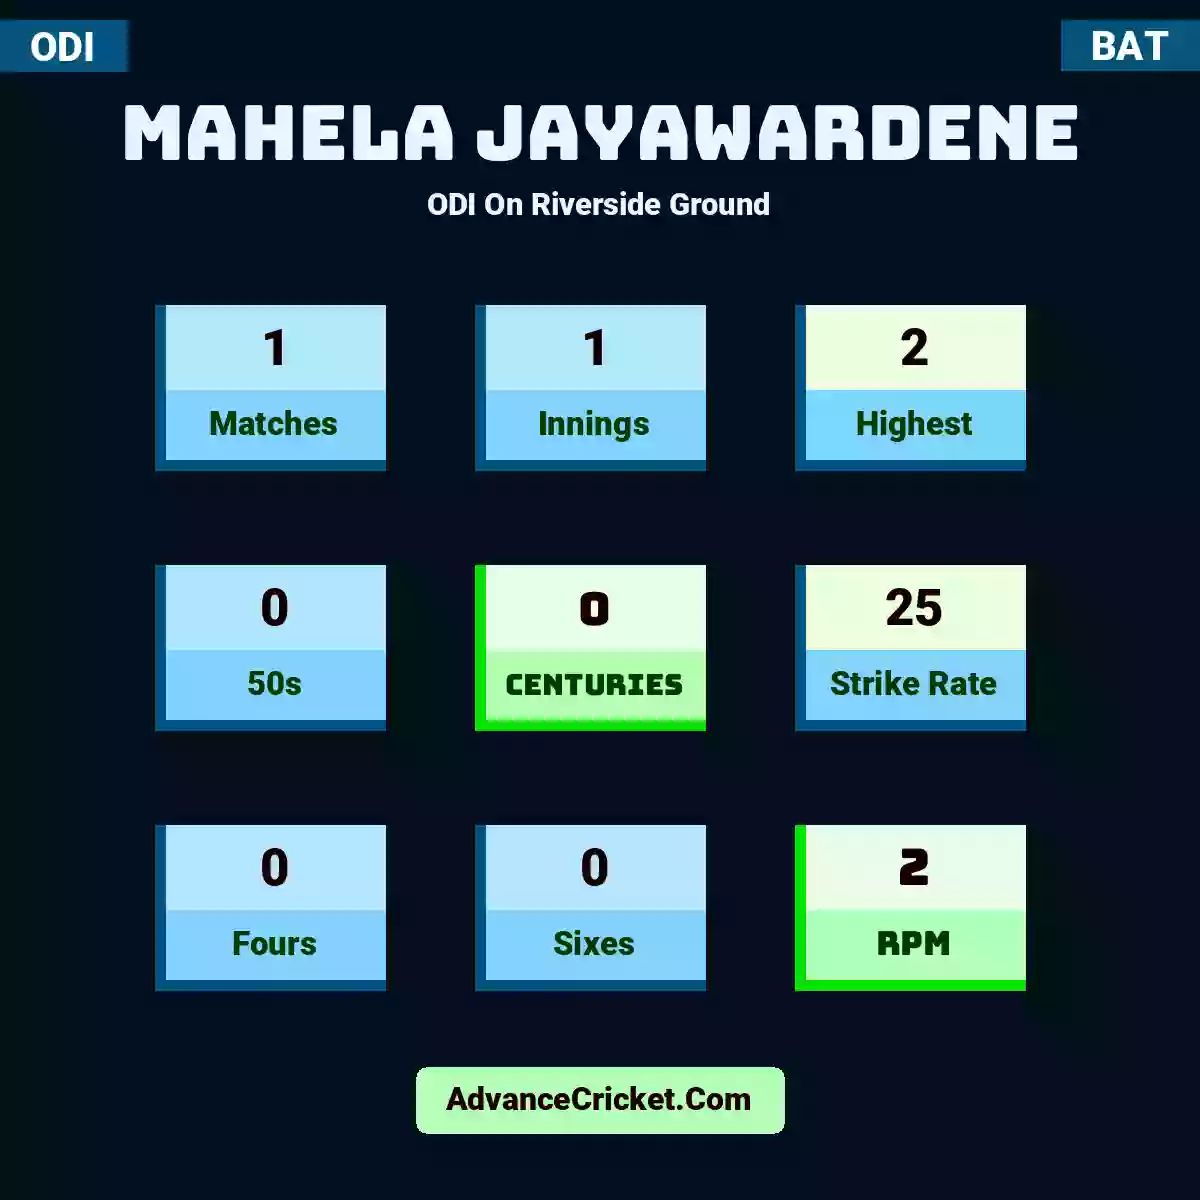 Mahela Jayawardene ODI  On Riverside Ground, Mahela Jayawardene played 1 matches, scored 2 runs as highest, 0 half-centuries, and 0 centuries, with a strike rate of 25. M.Jayawardene hit 0 fours and 0 sixes, with an RPM of 2.